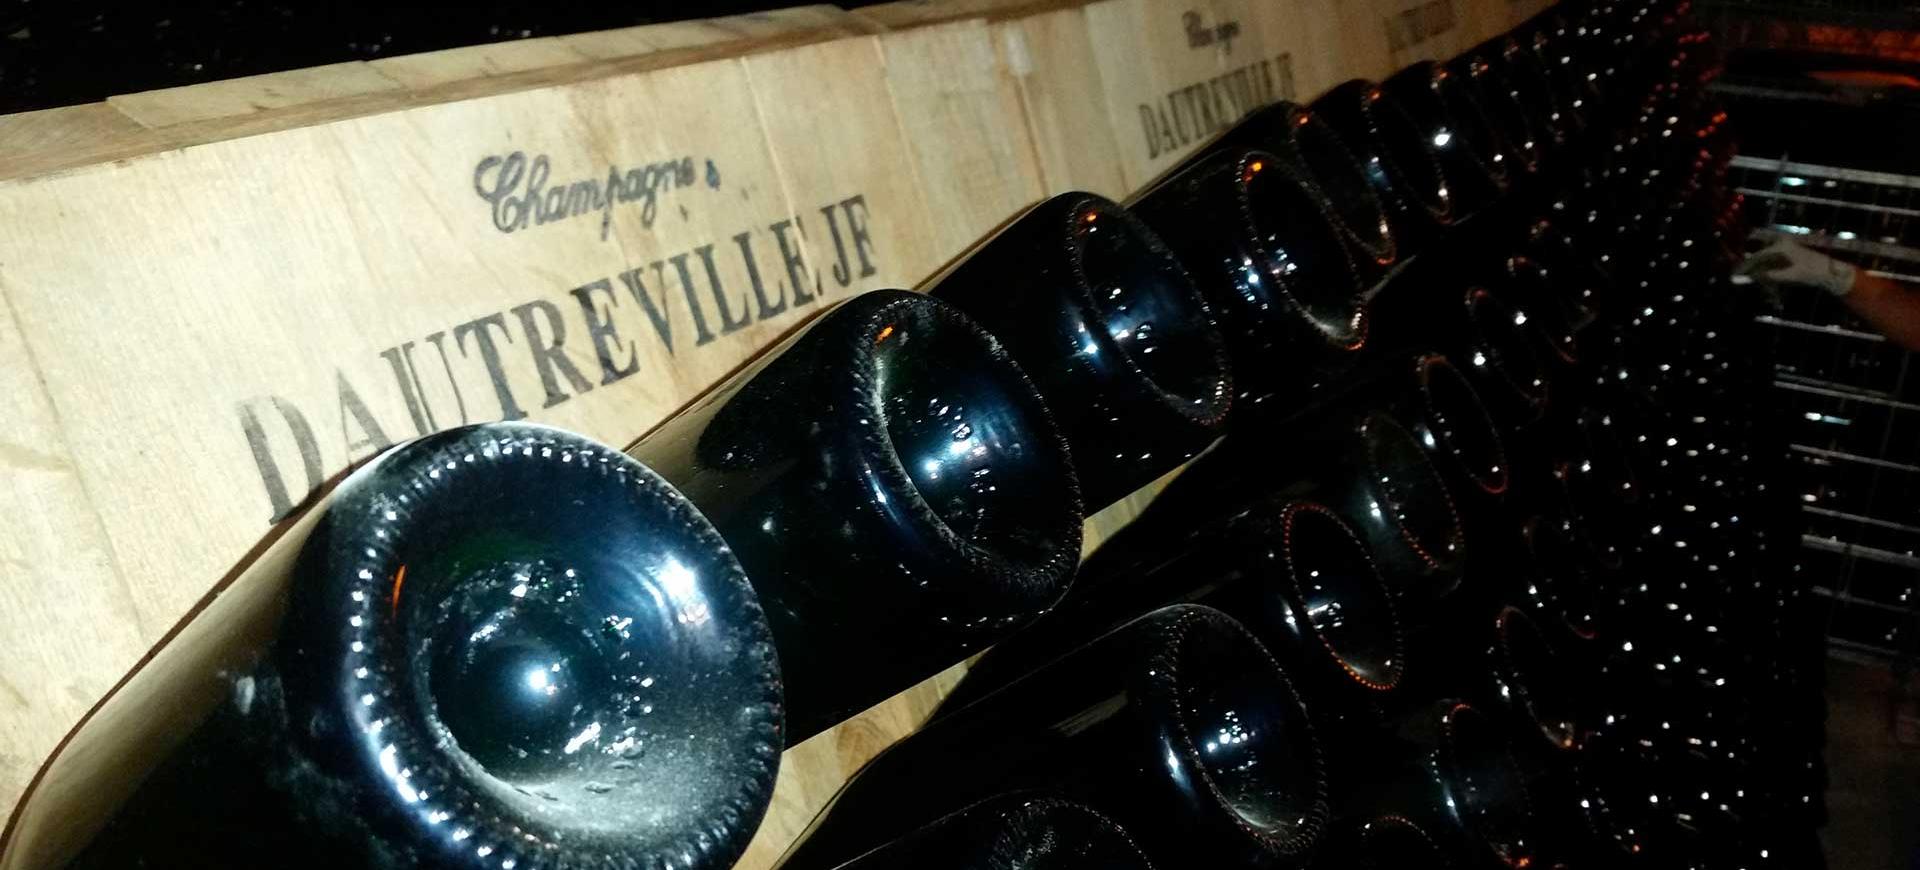 Champagne Dautreville